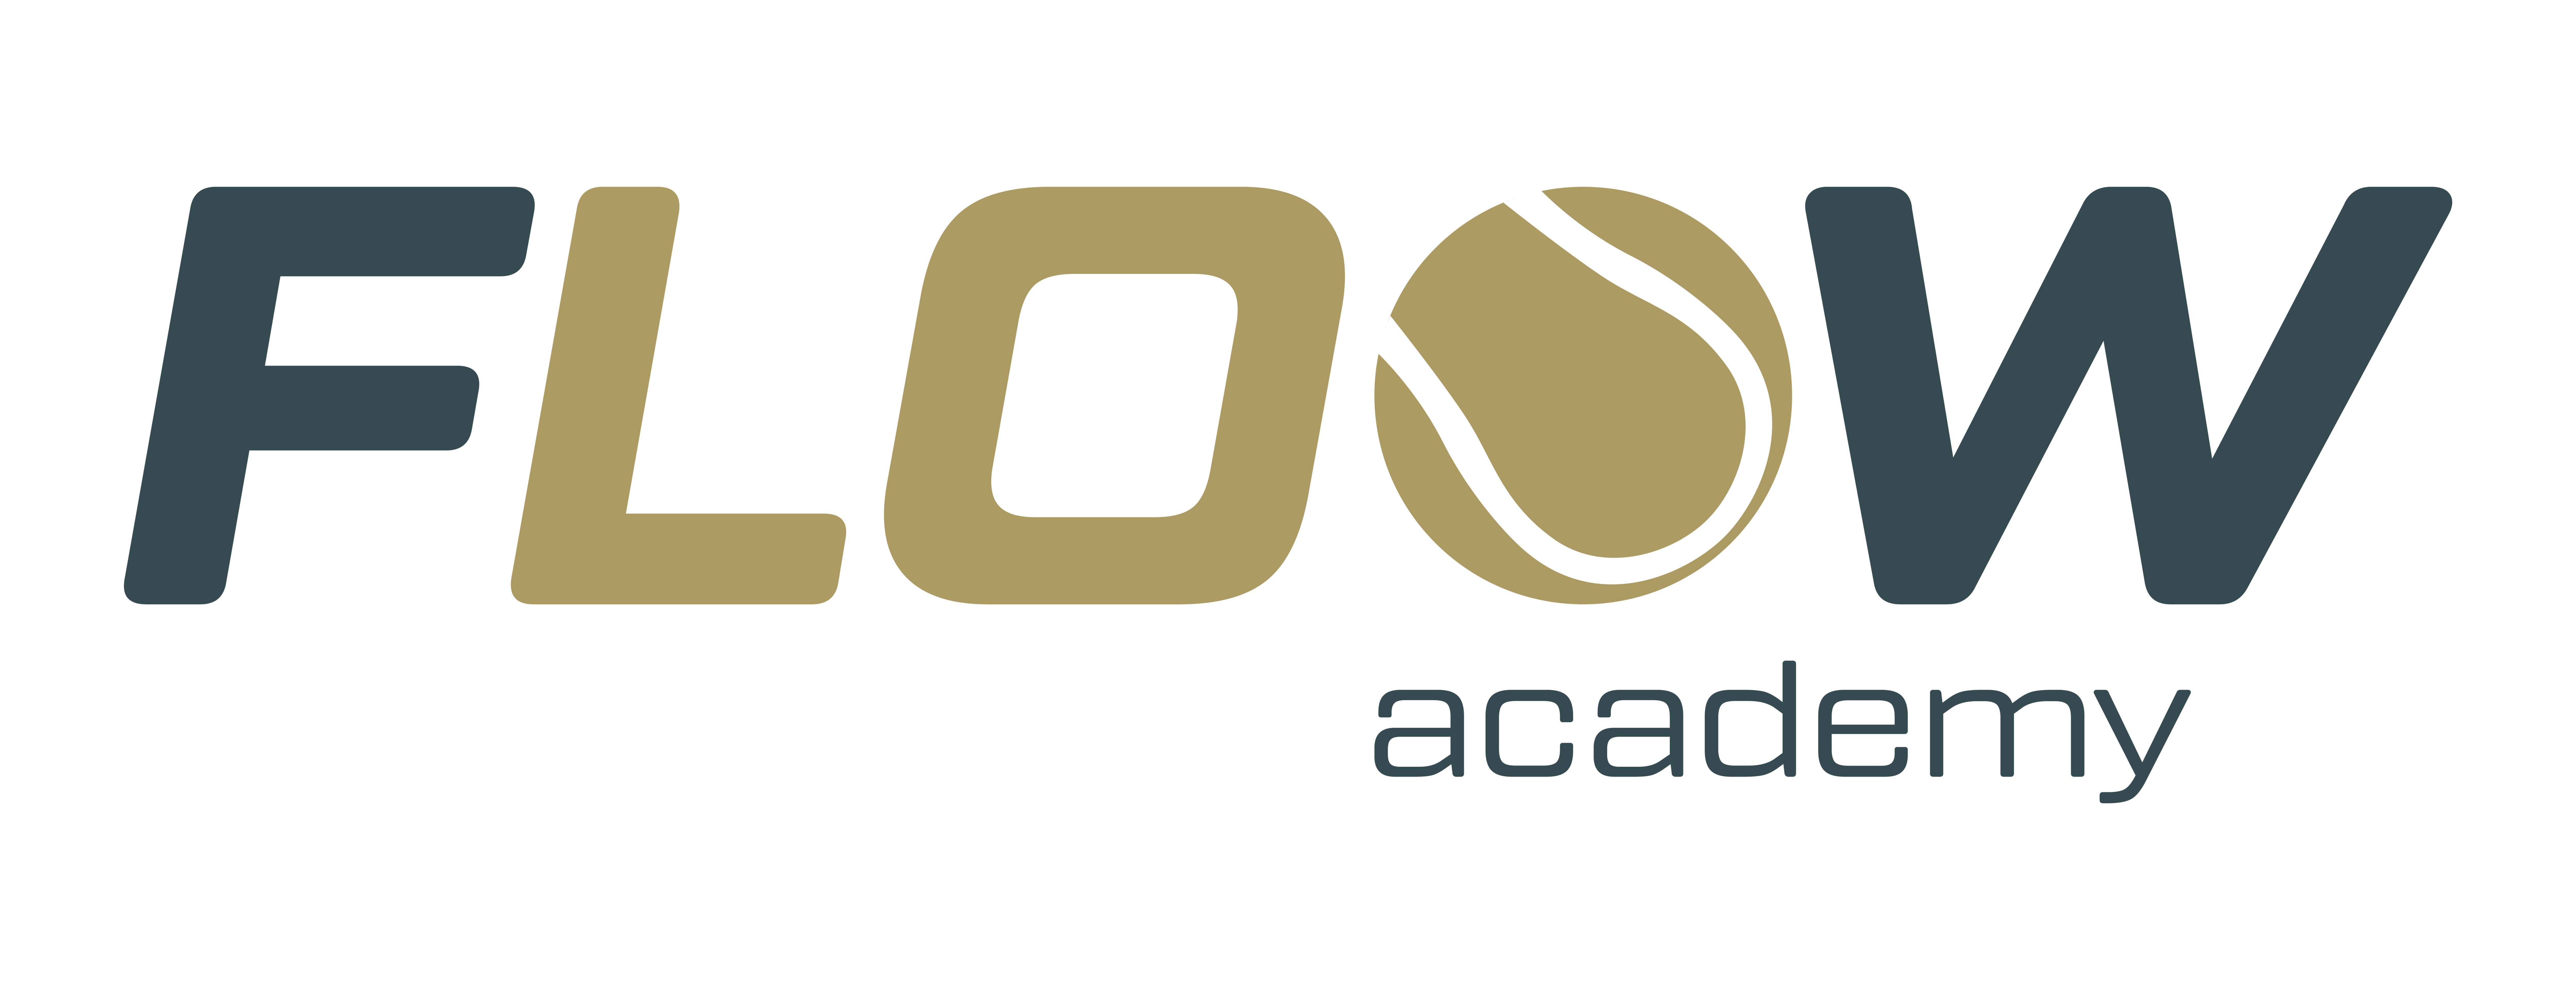 Tennisschool Floow Academy